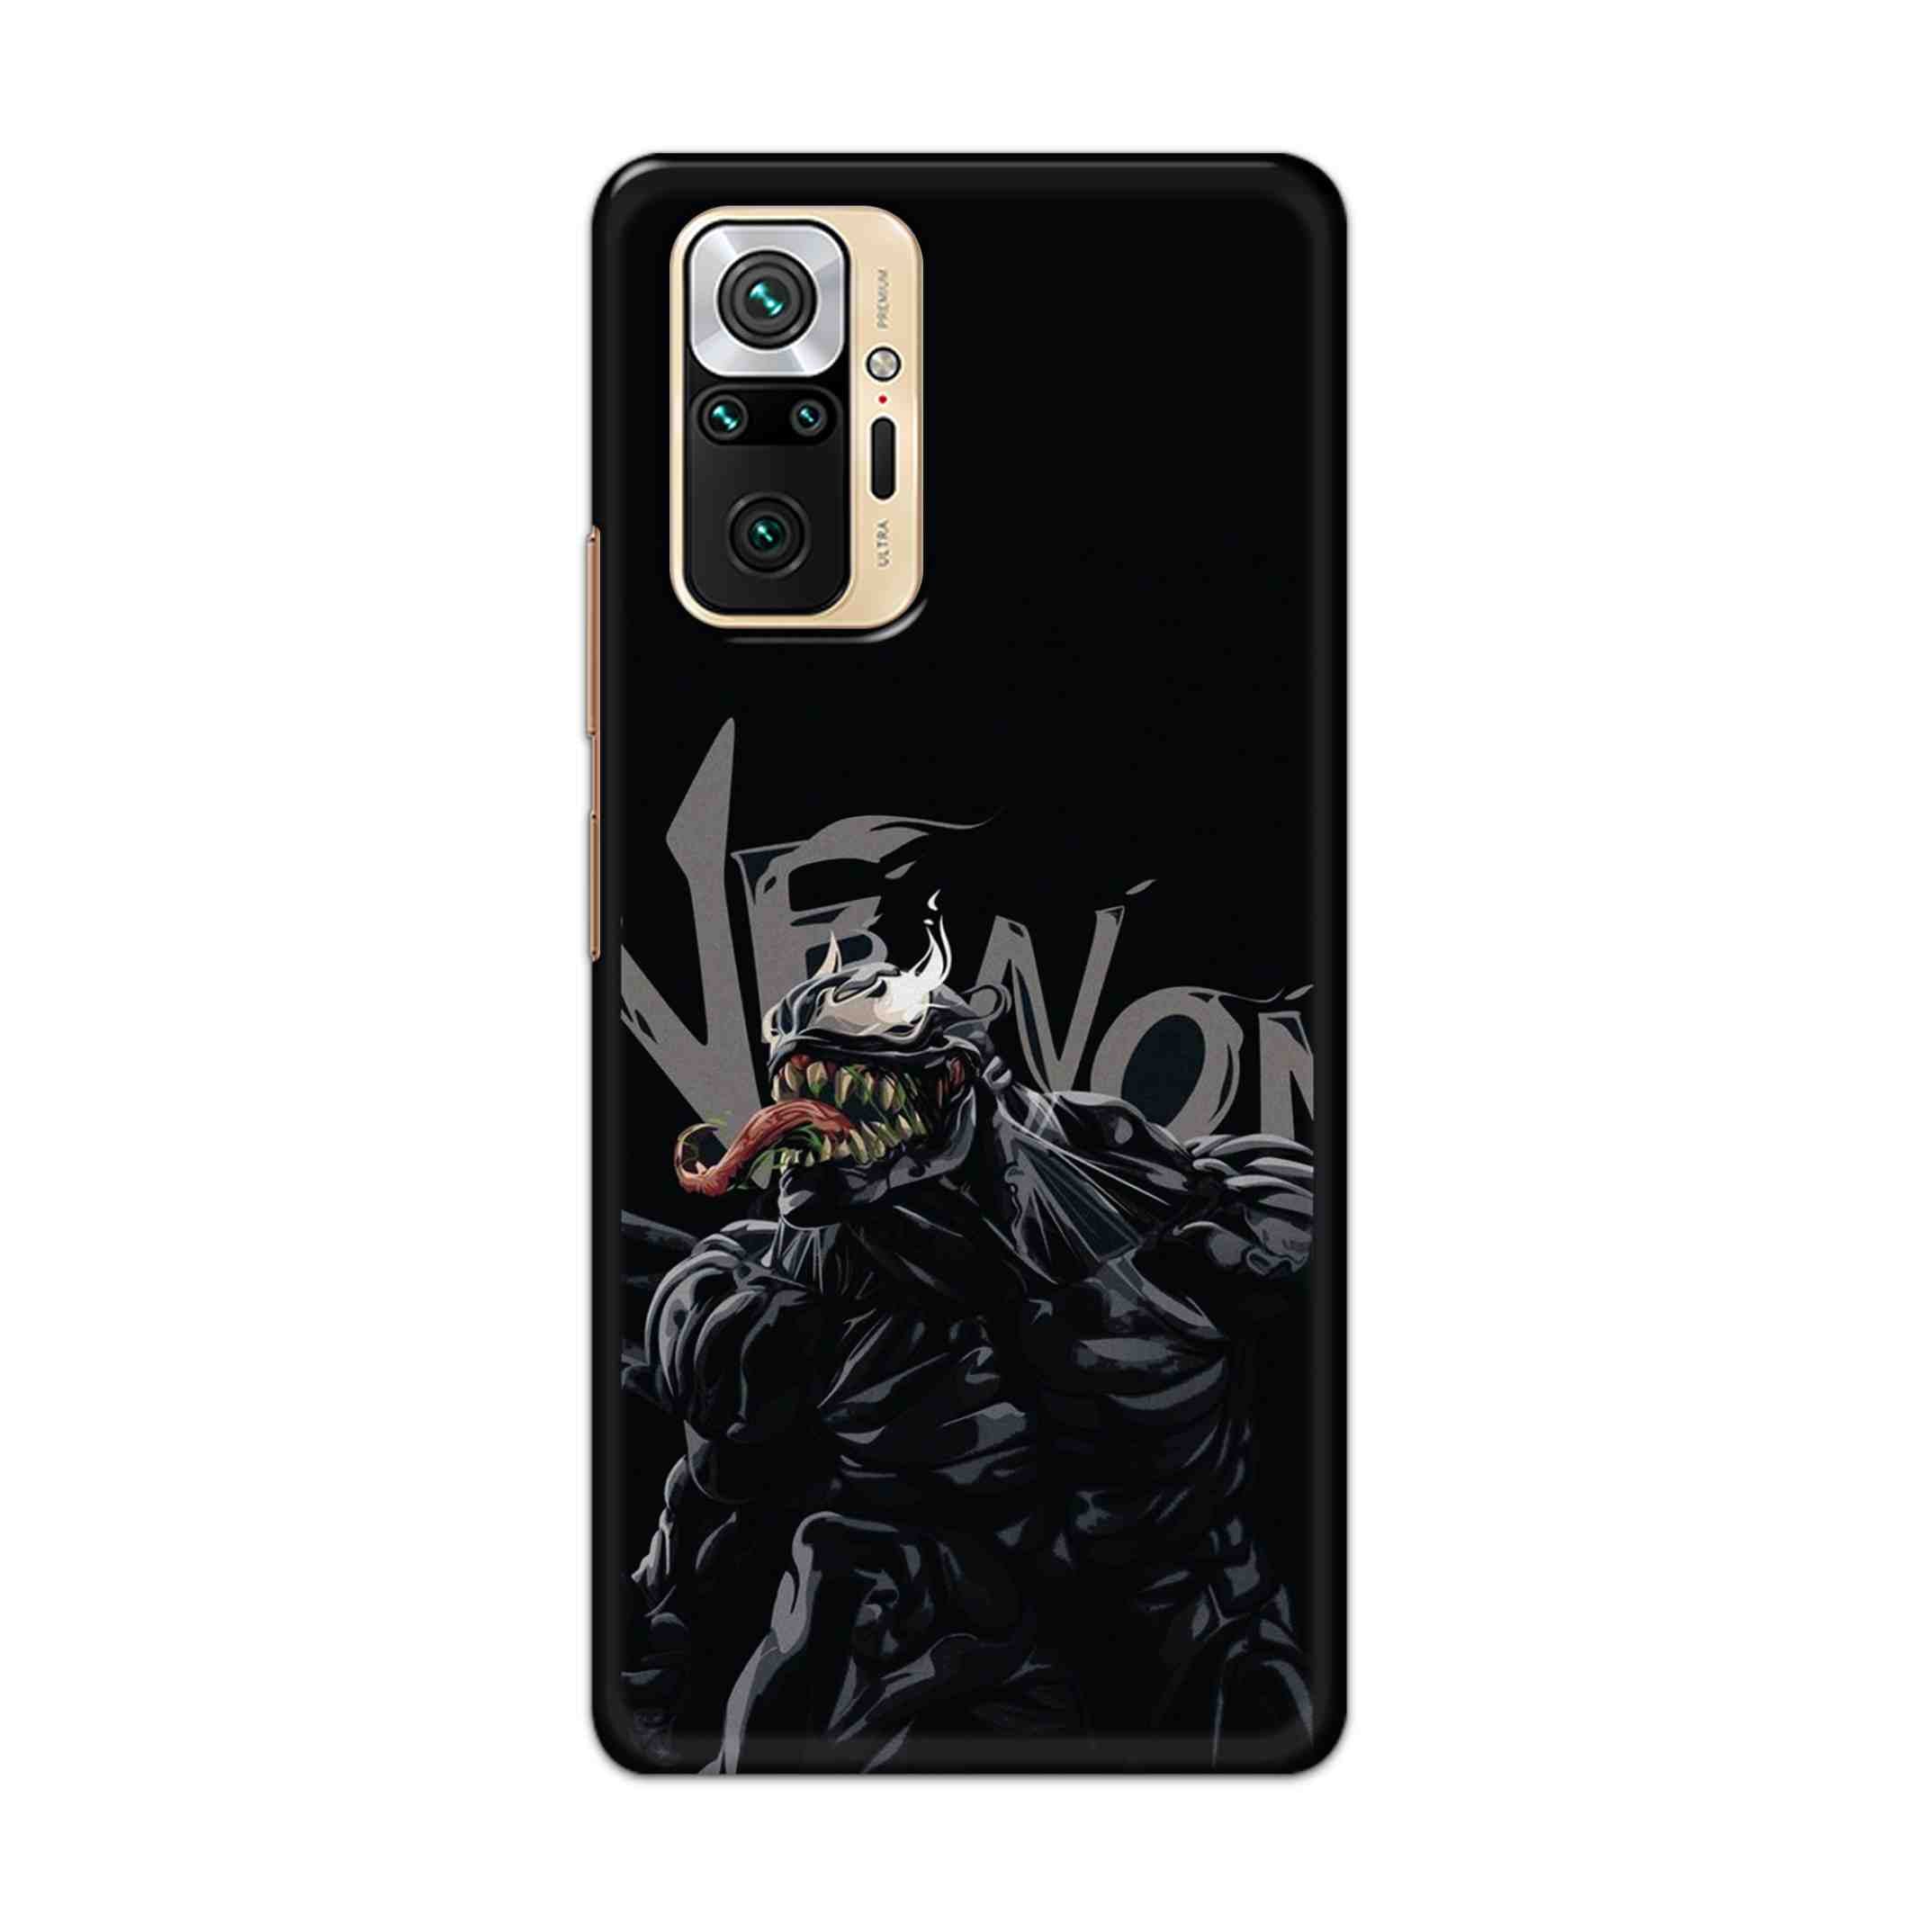 Buy  Venom Hard Back Mobile Phone Case Cover For Redmi Note 10 Pro Online